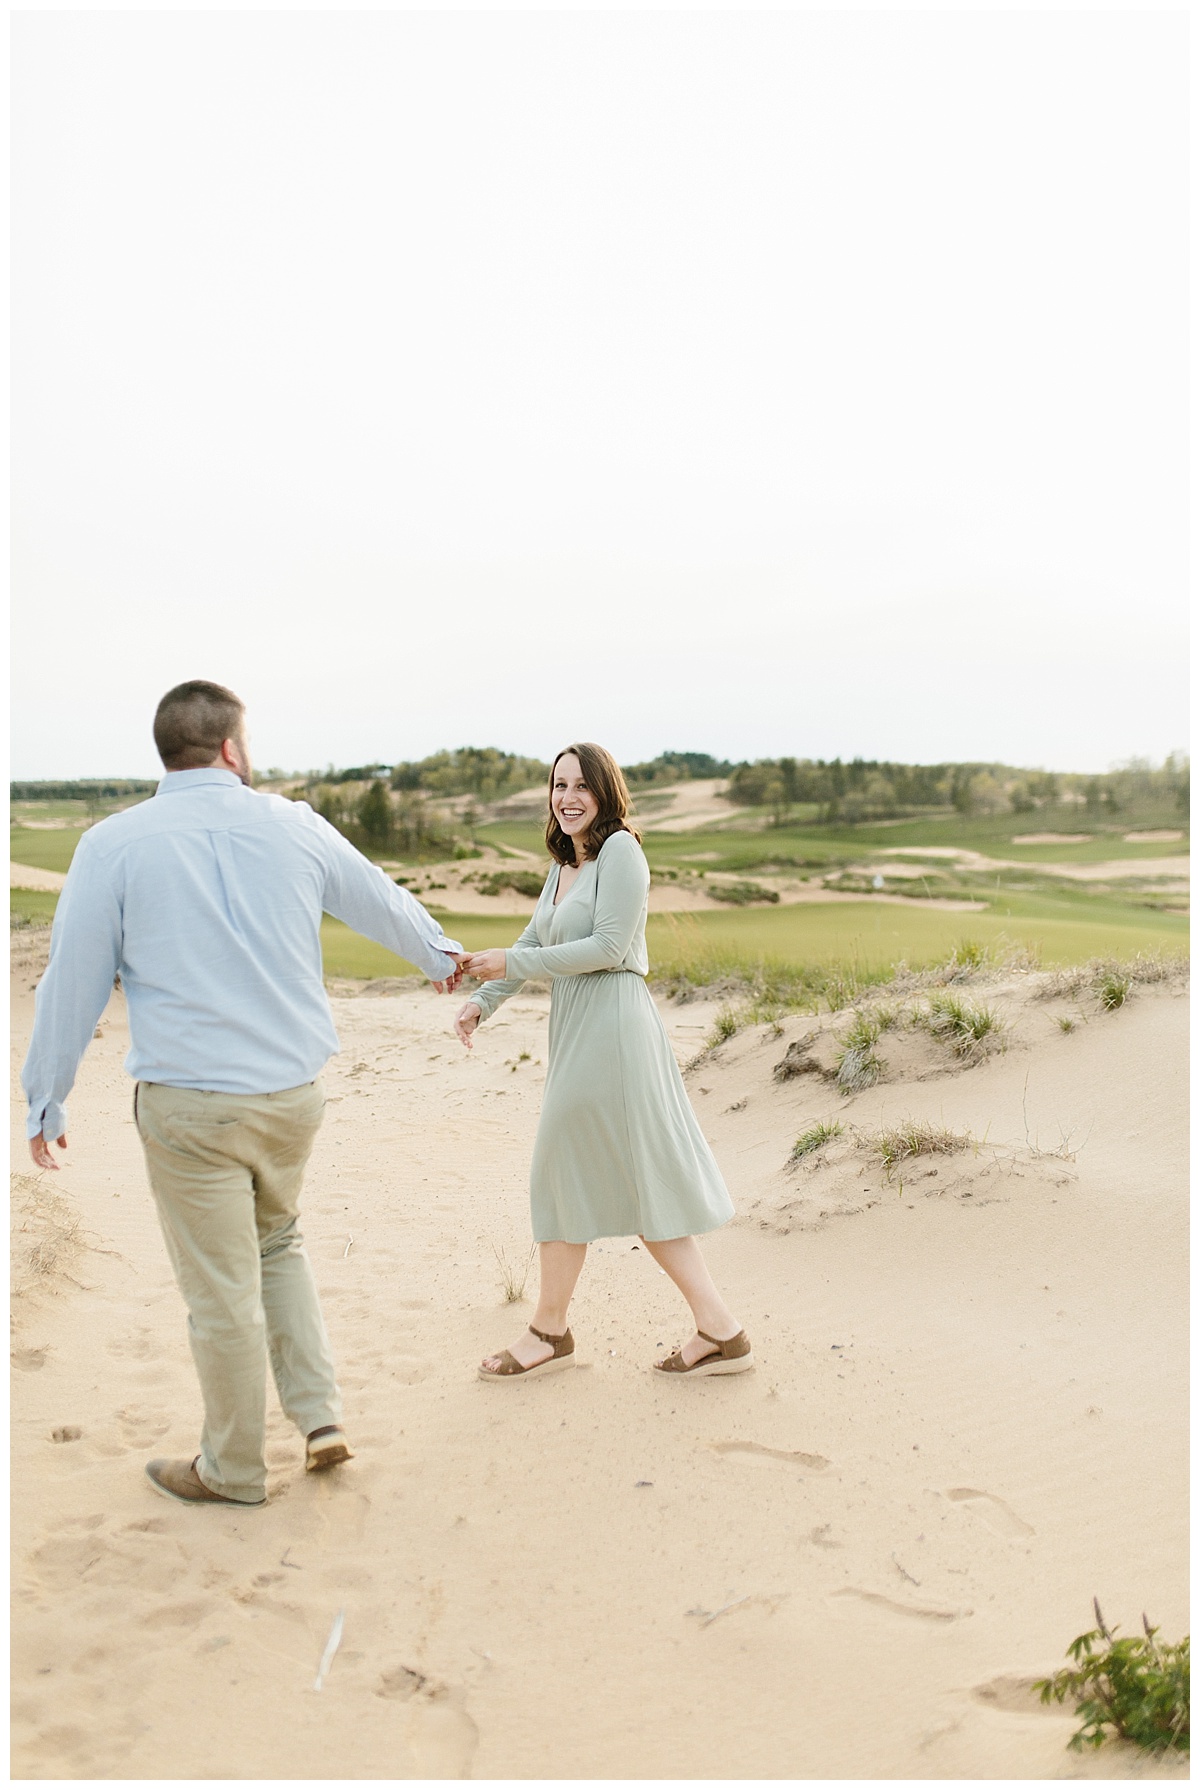 Engagement, Central Wisconsin, Wisconsin, Golf Course, Spring, Beach, Natural light, Wedding Photographer, Stevens Point, Sand Valley, Nekoosa